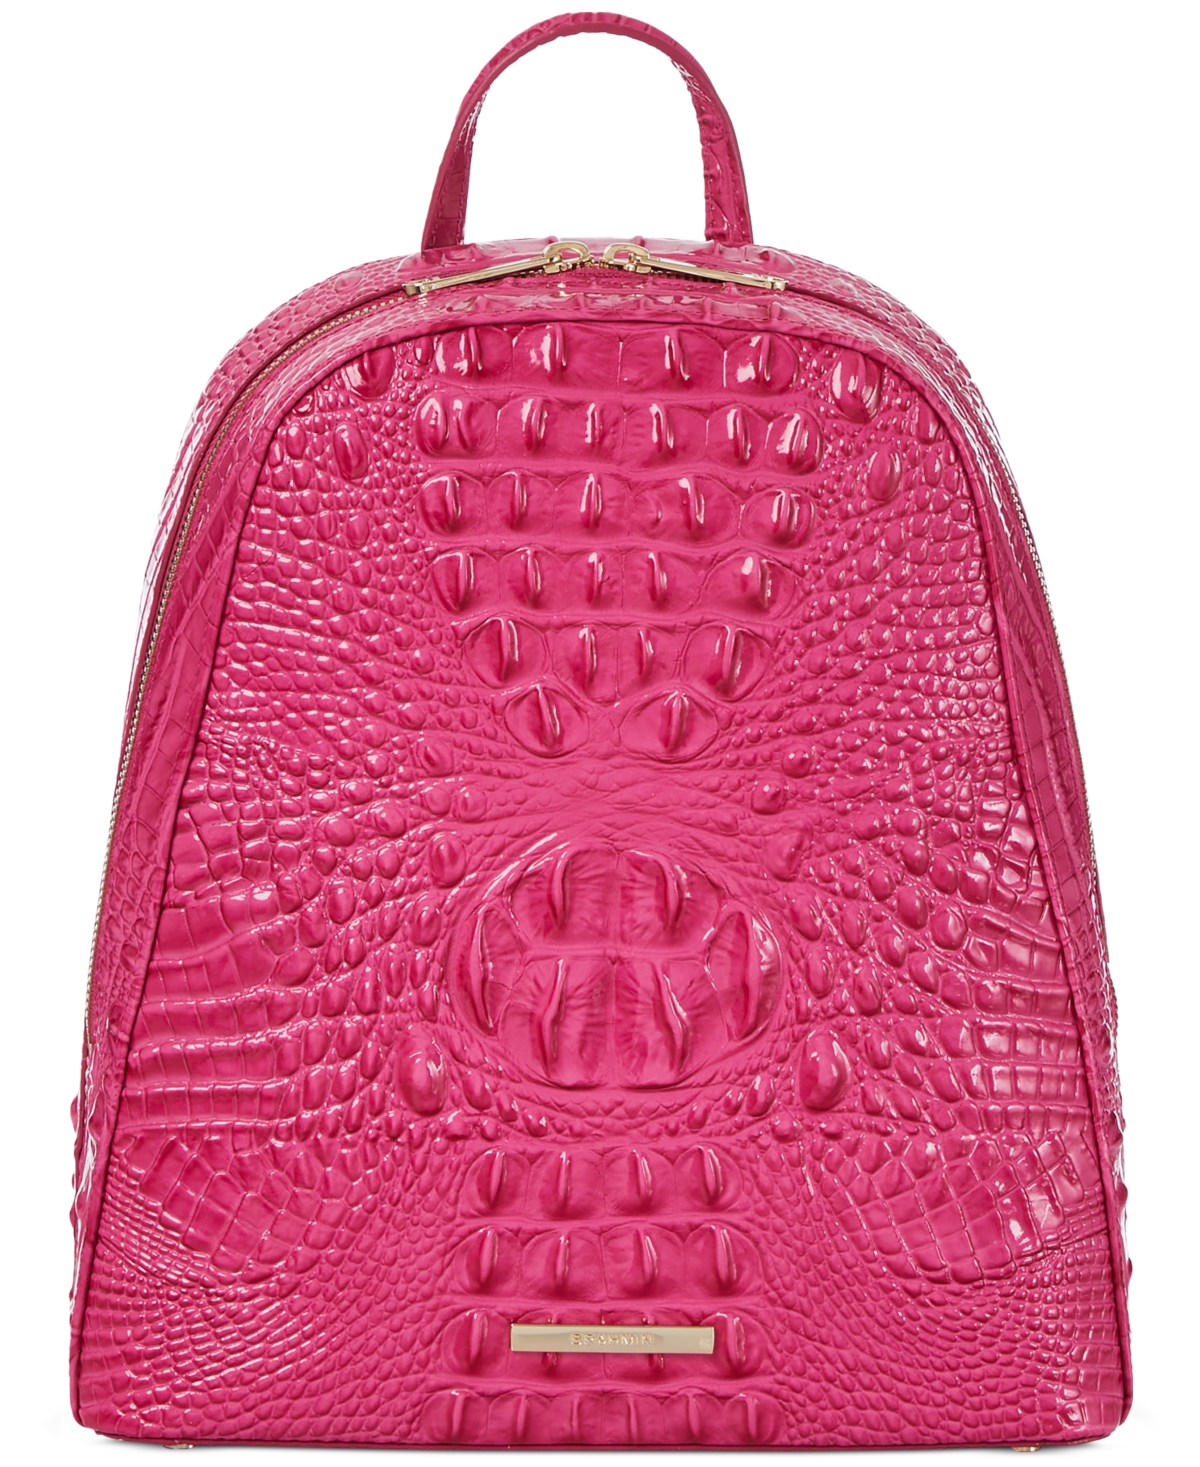 Brahmin Nola Leather Backpack In Pink